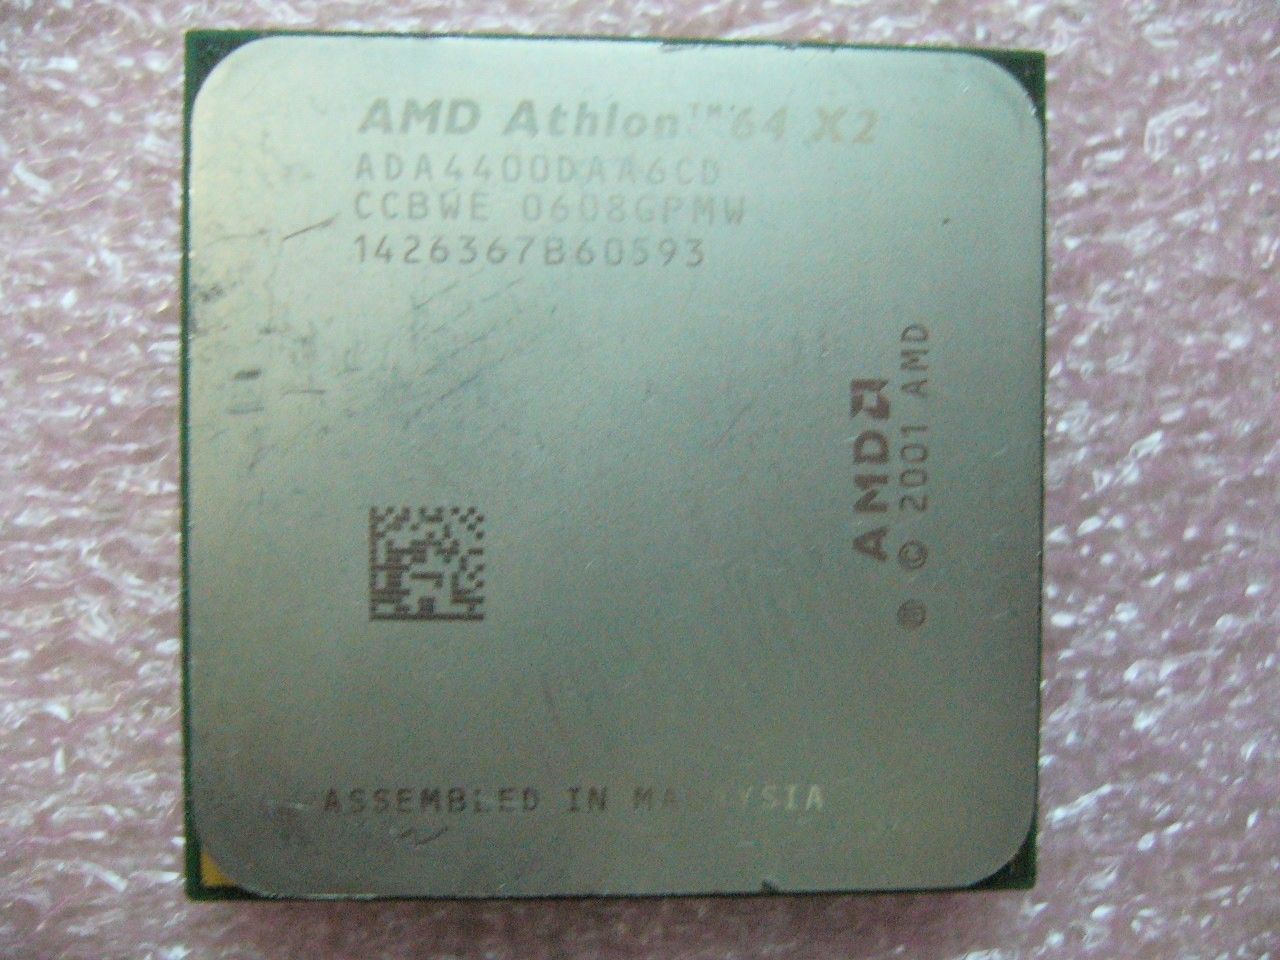 QTY 1x AMD Athlon 64 X2 4400+ 2.2 GHz Dual-Core (ADA4400DAA6CD) CPU 939-Pin